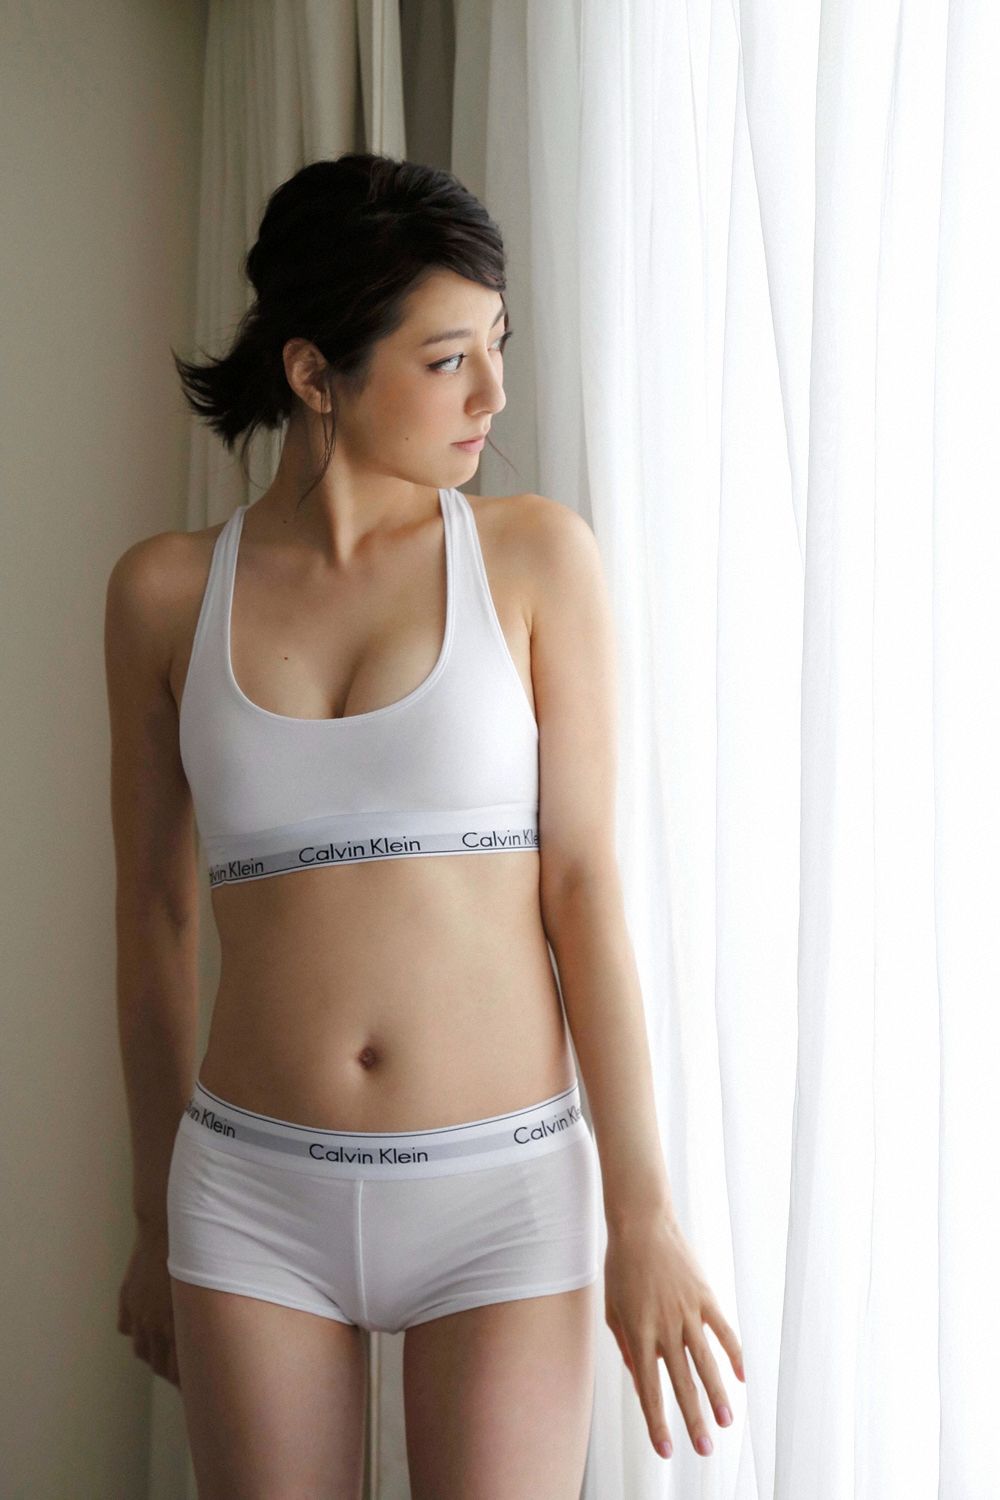 Yumi Sugimoto Sexy and Hottest Photos , Latest Pics